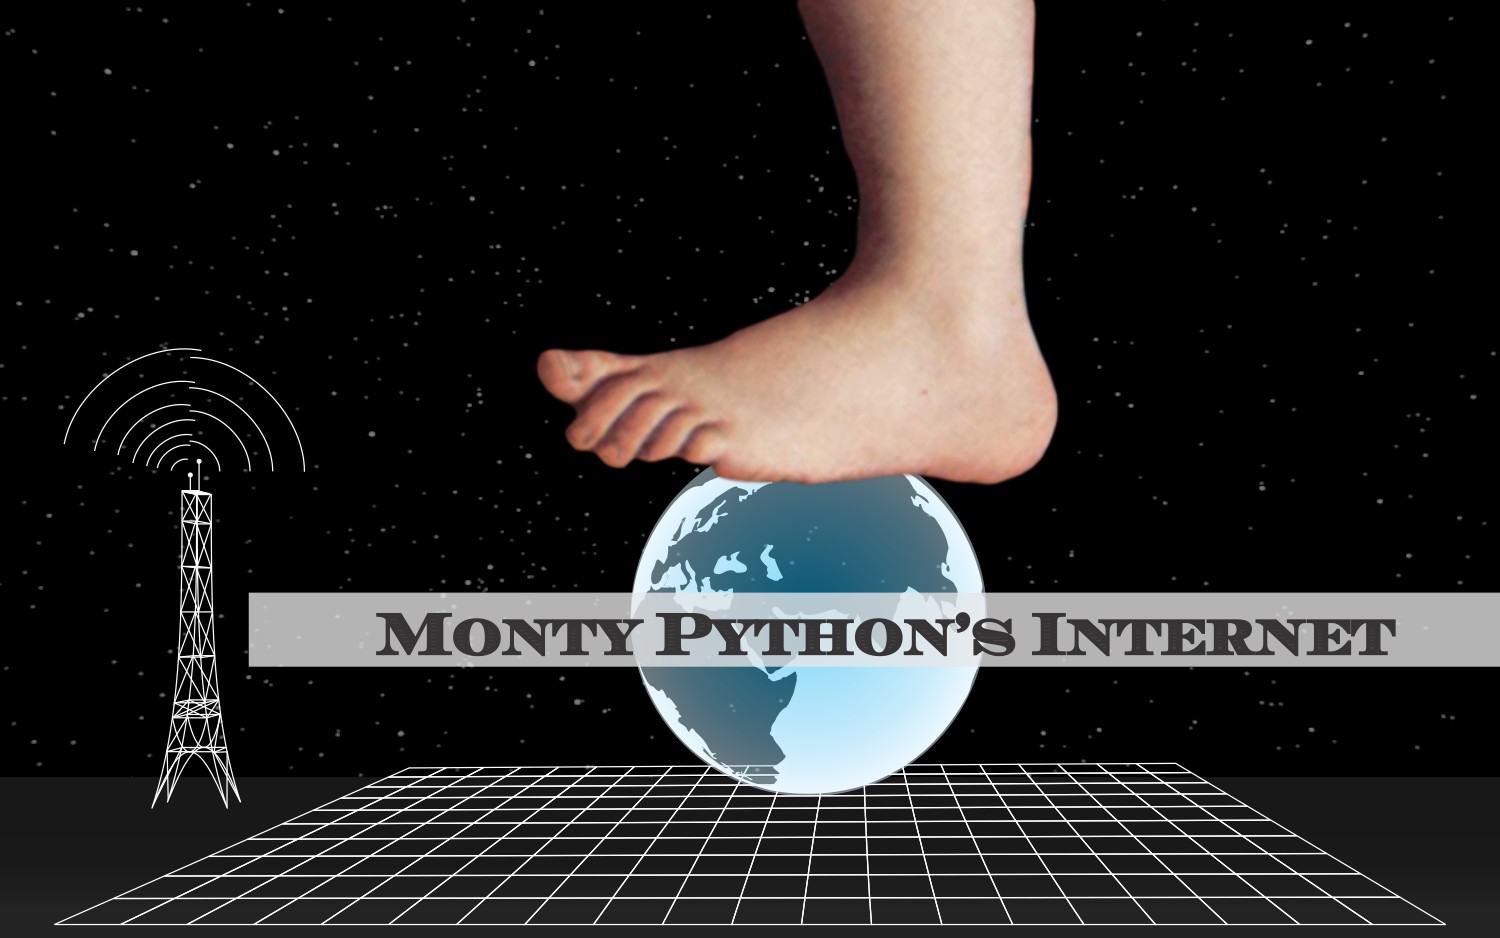 Monty Python’s Internet